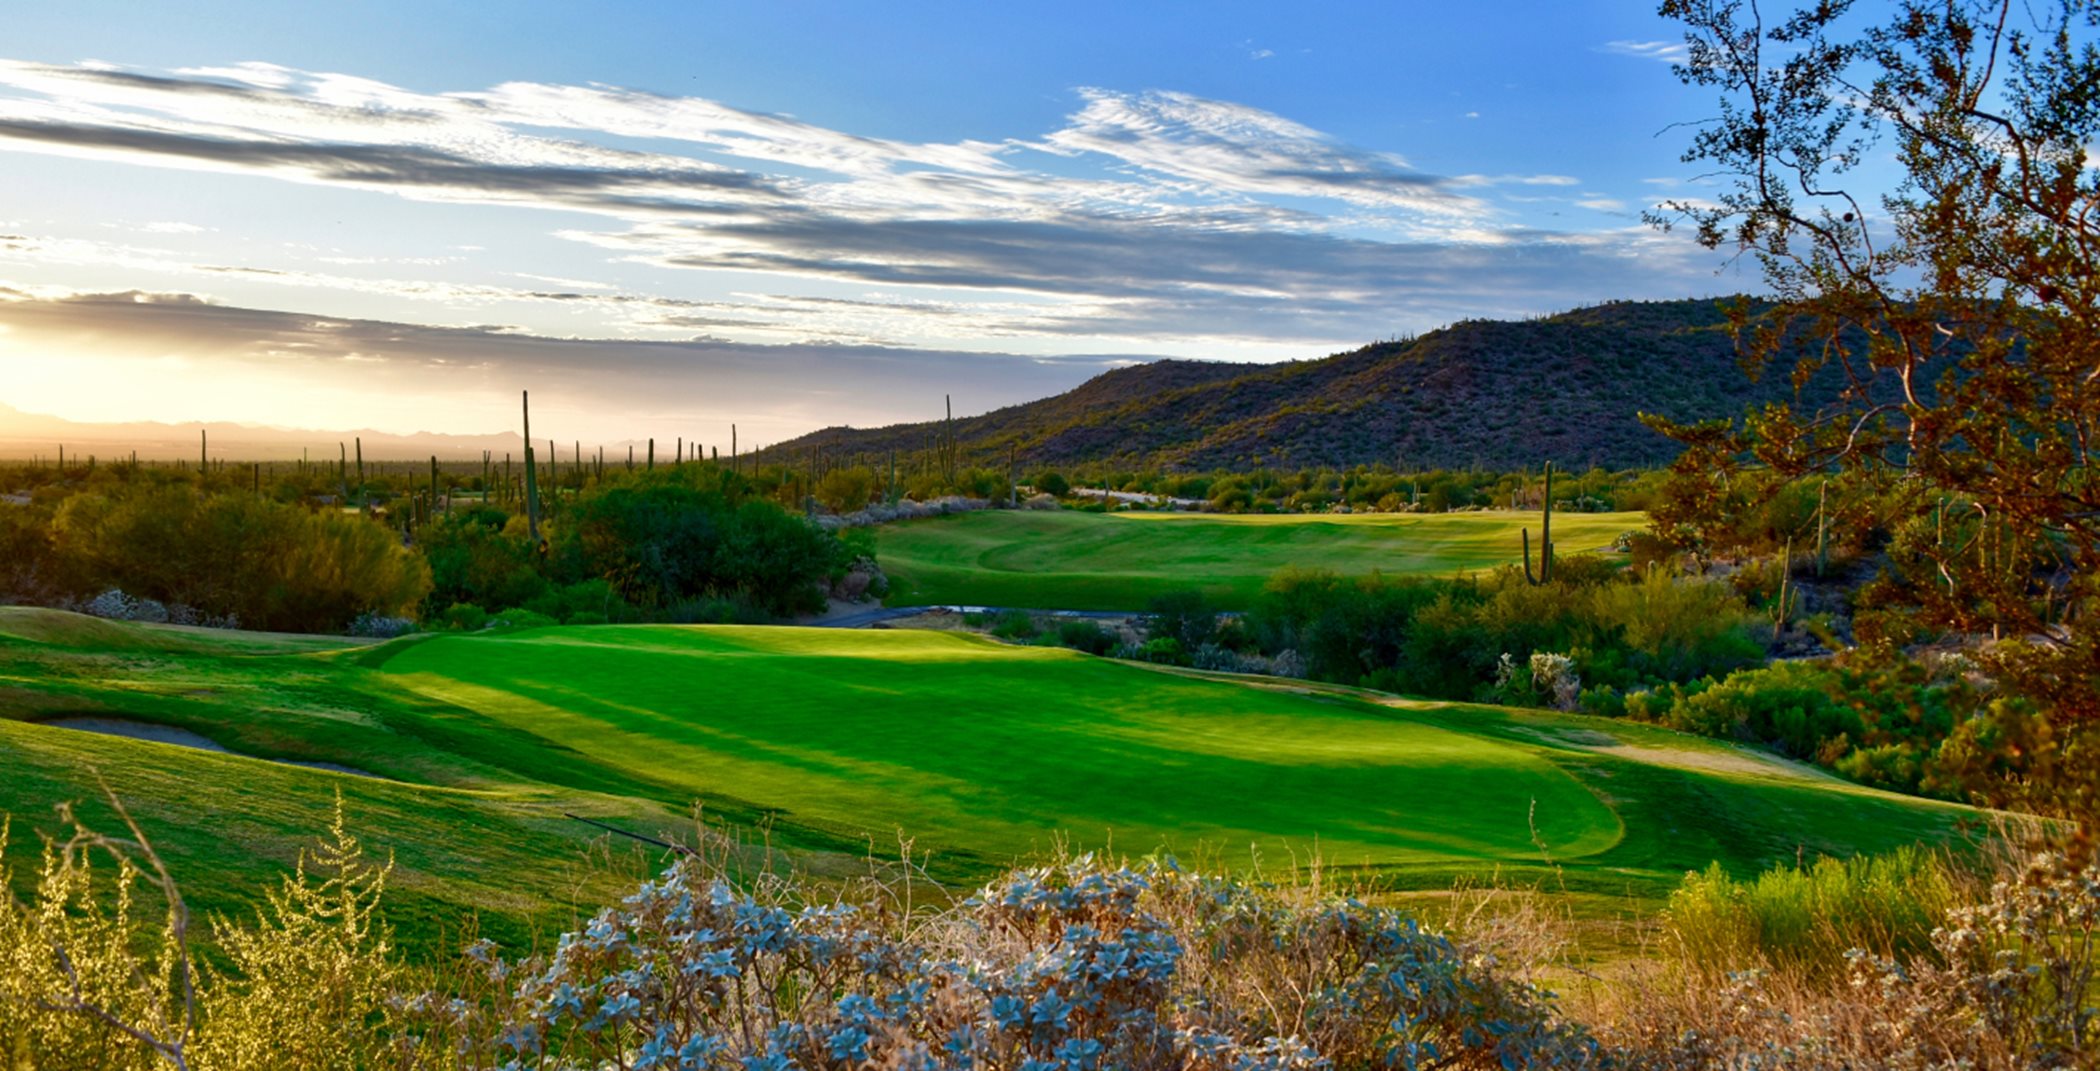 Vibrant golf course at dusk